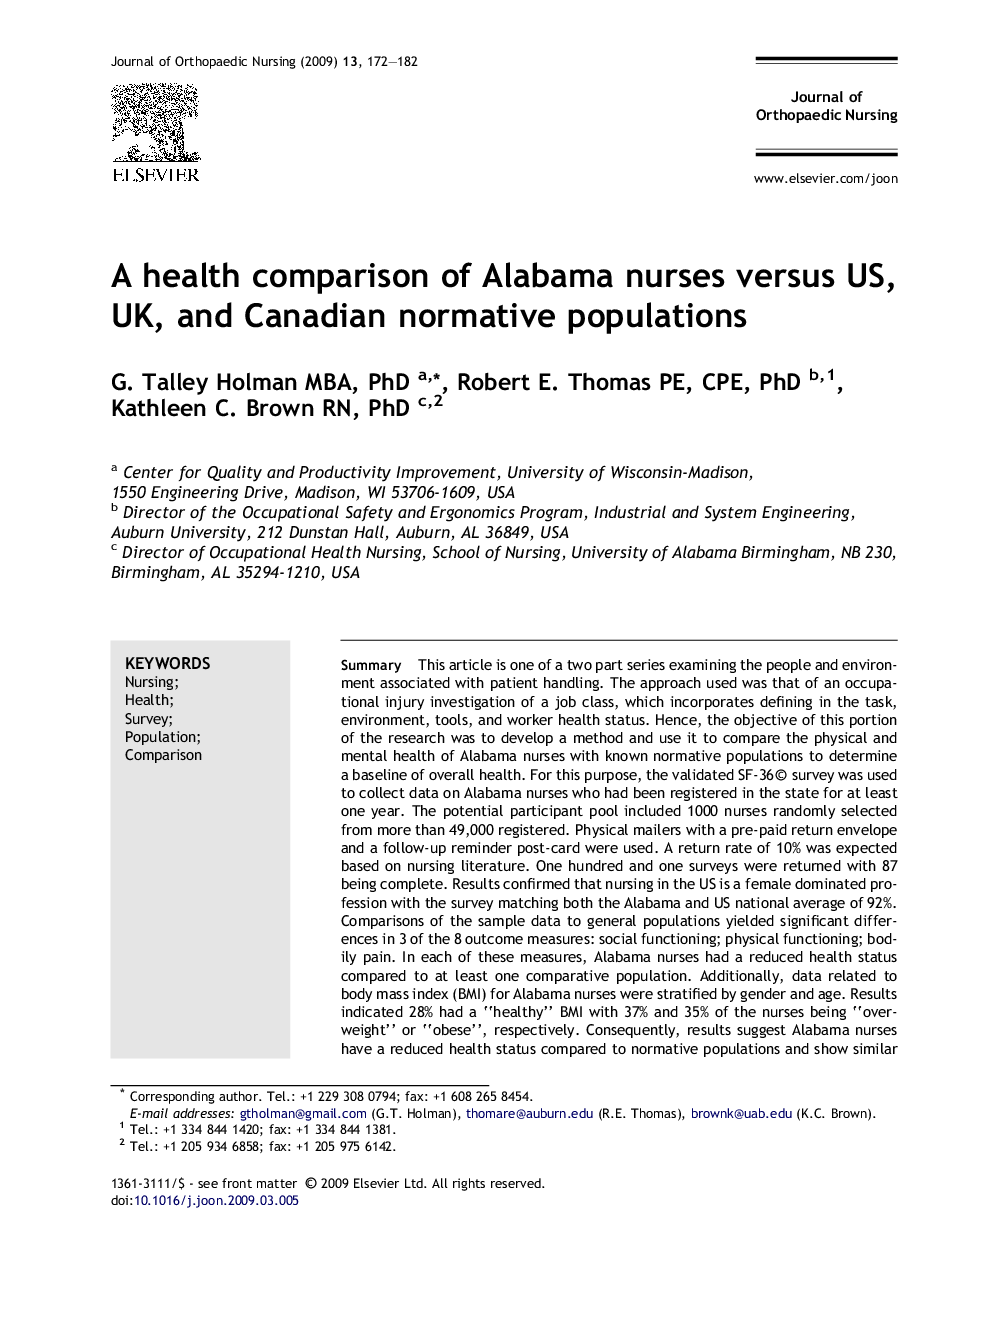 A health comparison of Alabama nurses versus US, UK, and Canadian normative populations